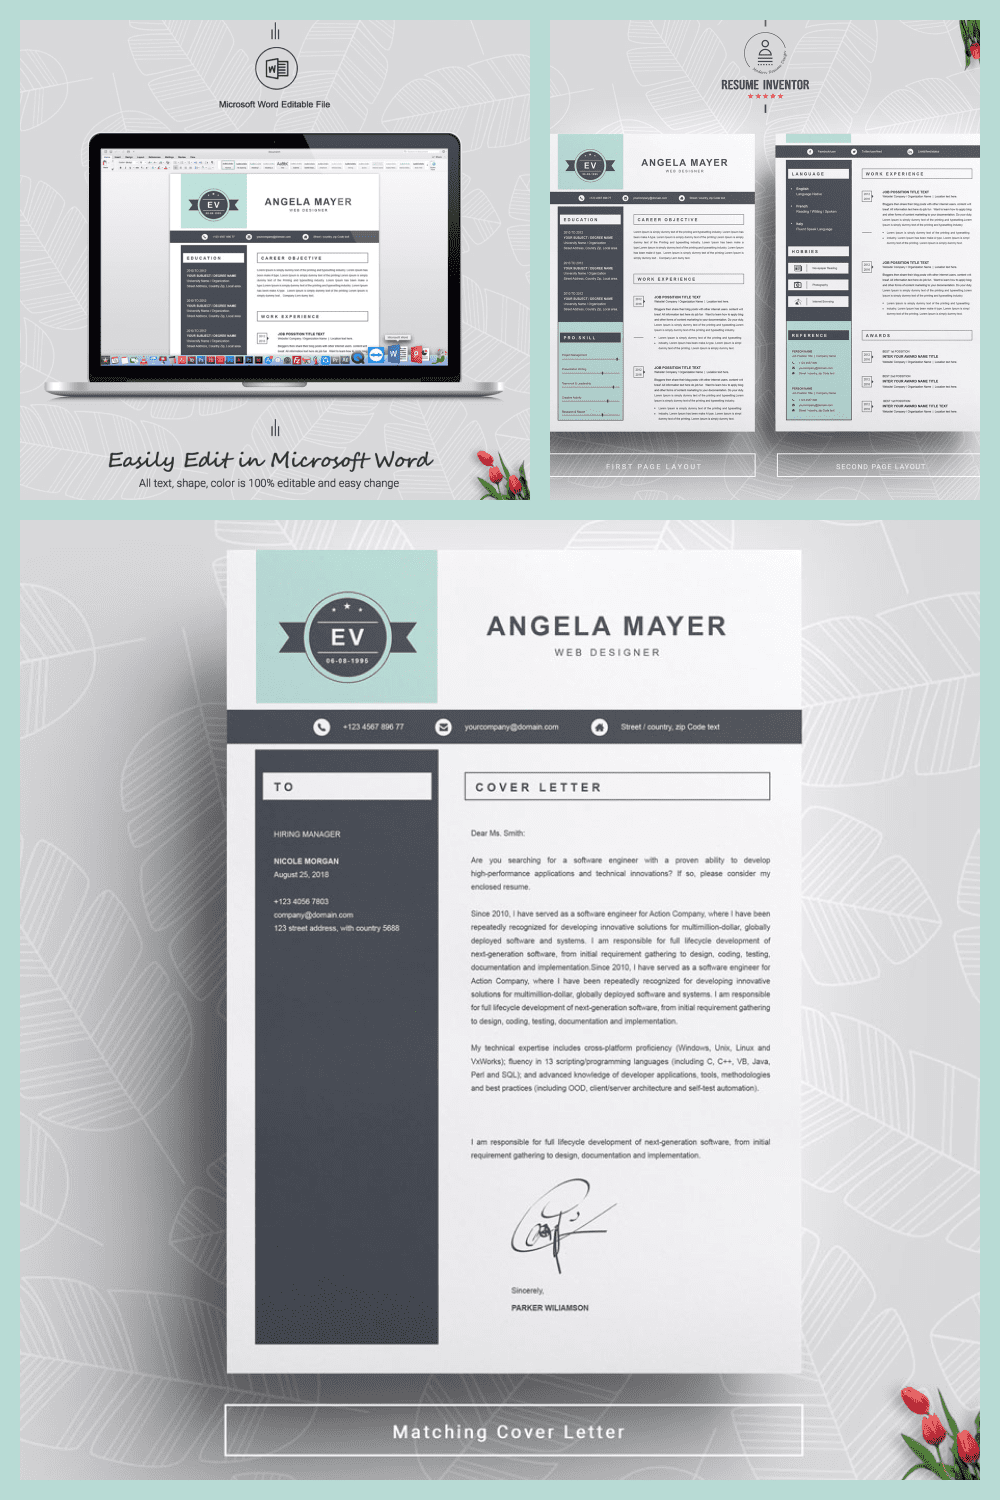 New Resume Template - MasterBundles - Pinterest Collage Image.